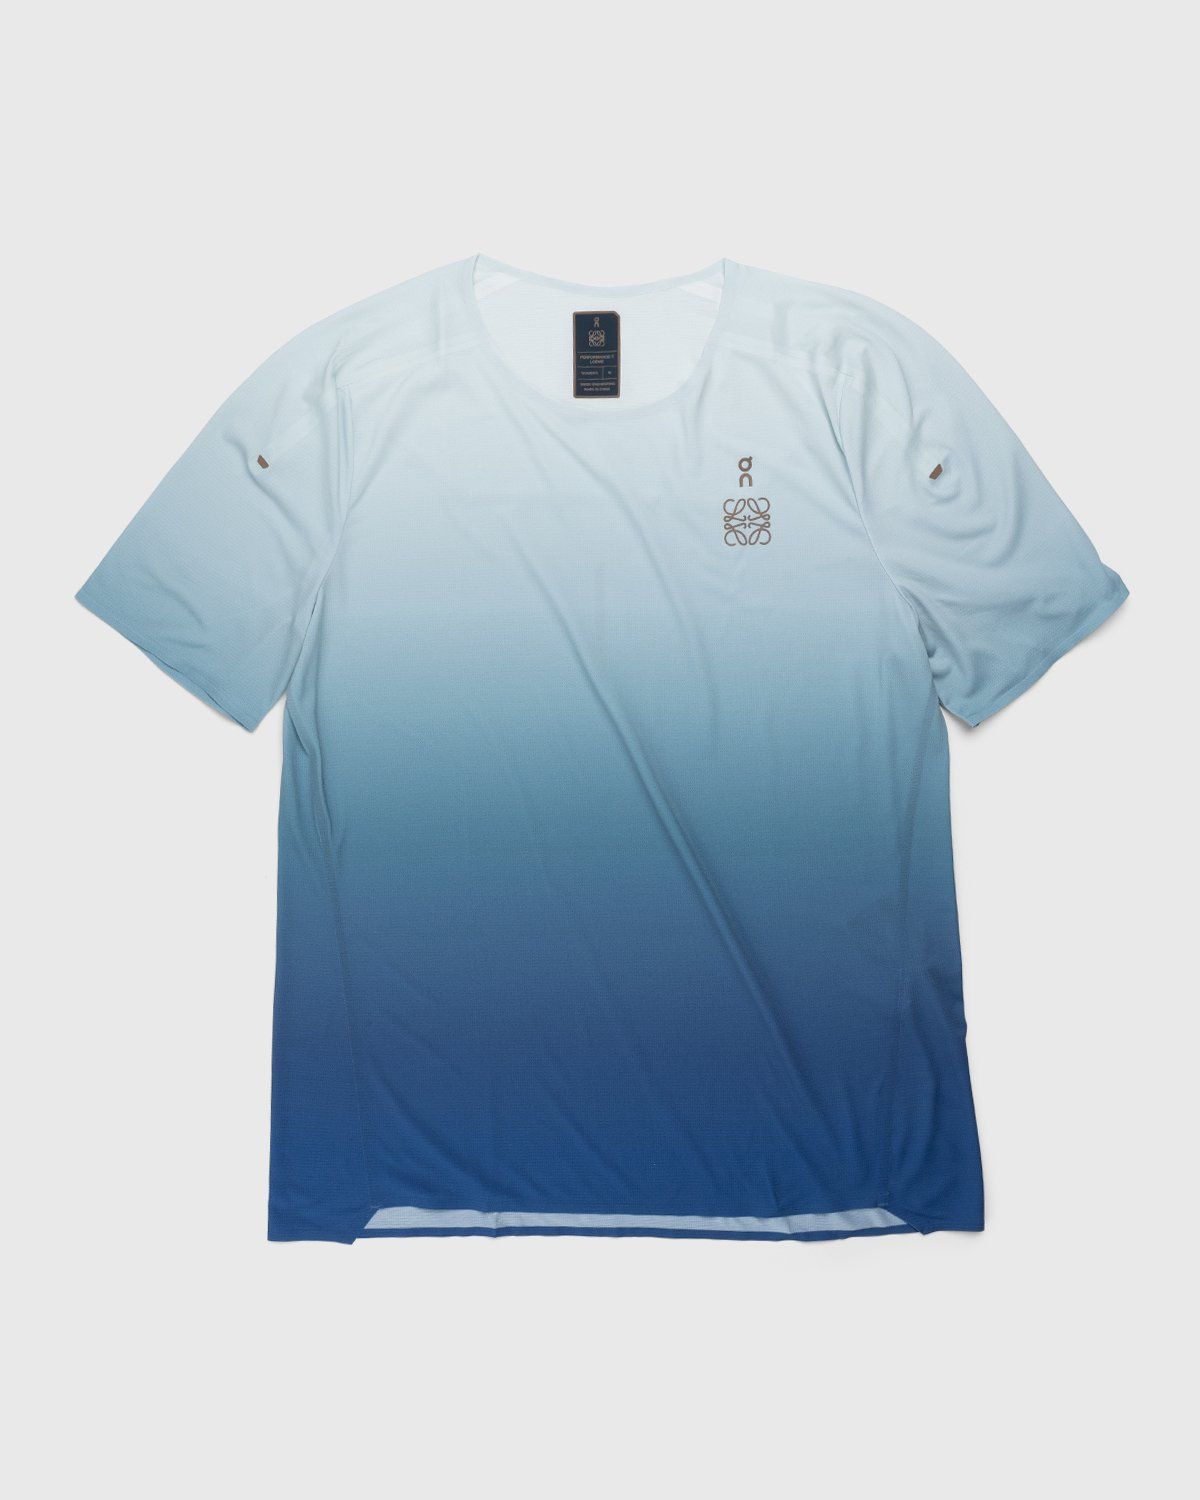 Loewe x On – Women's Performance T-Shirt Gradient Grey - Tops - Blue - Image 1